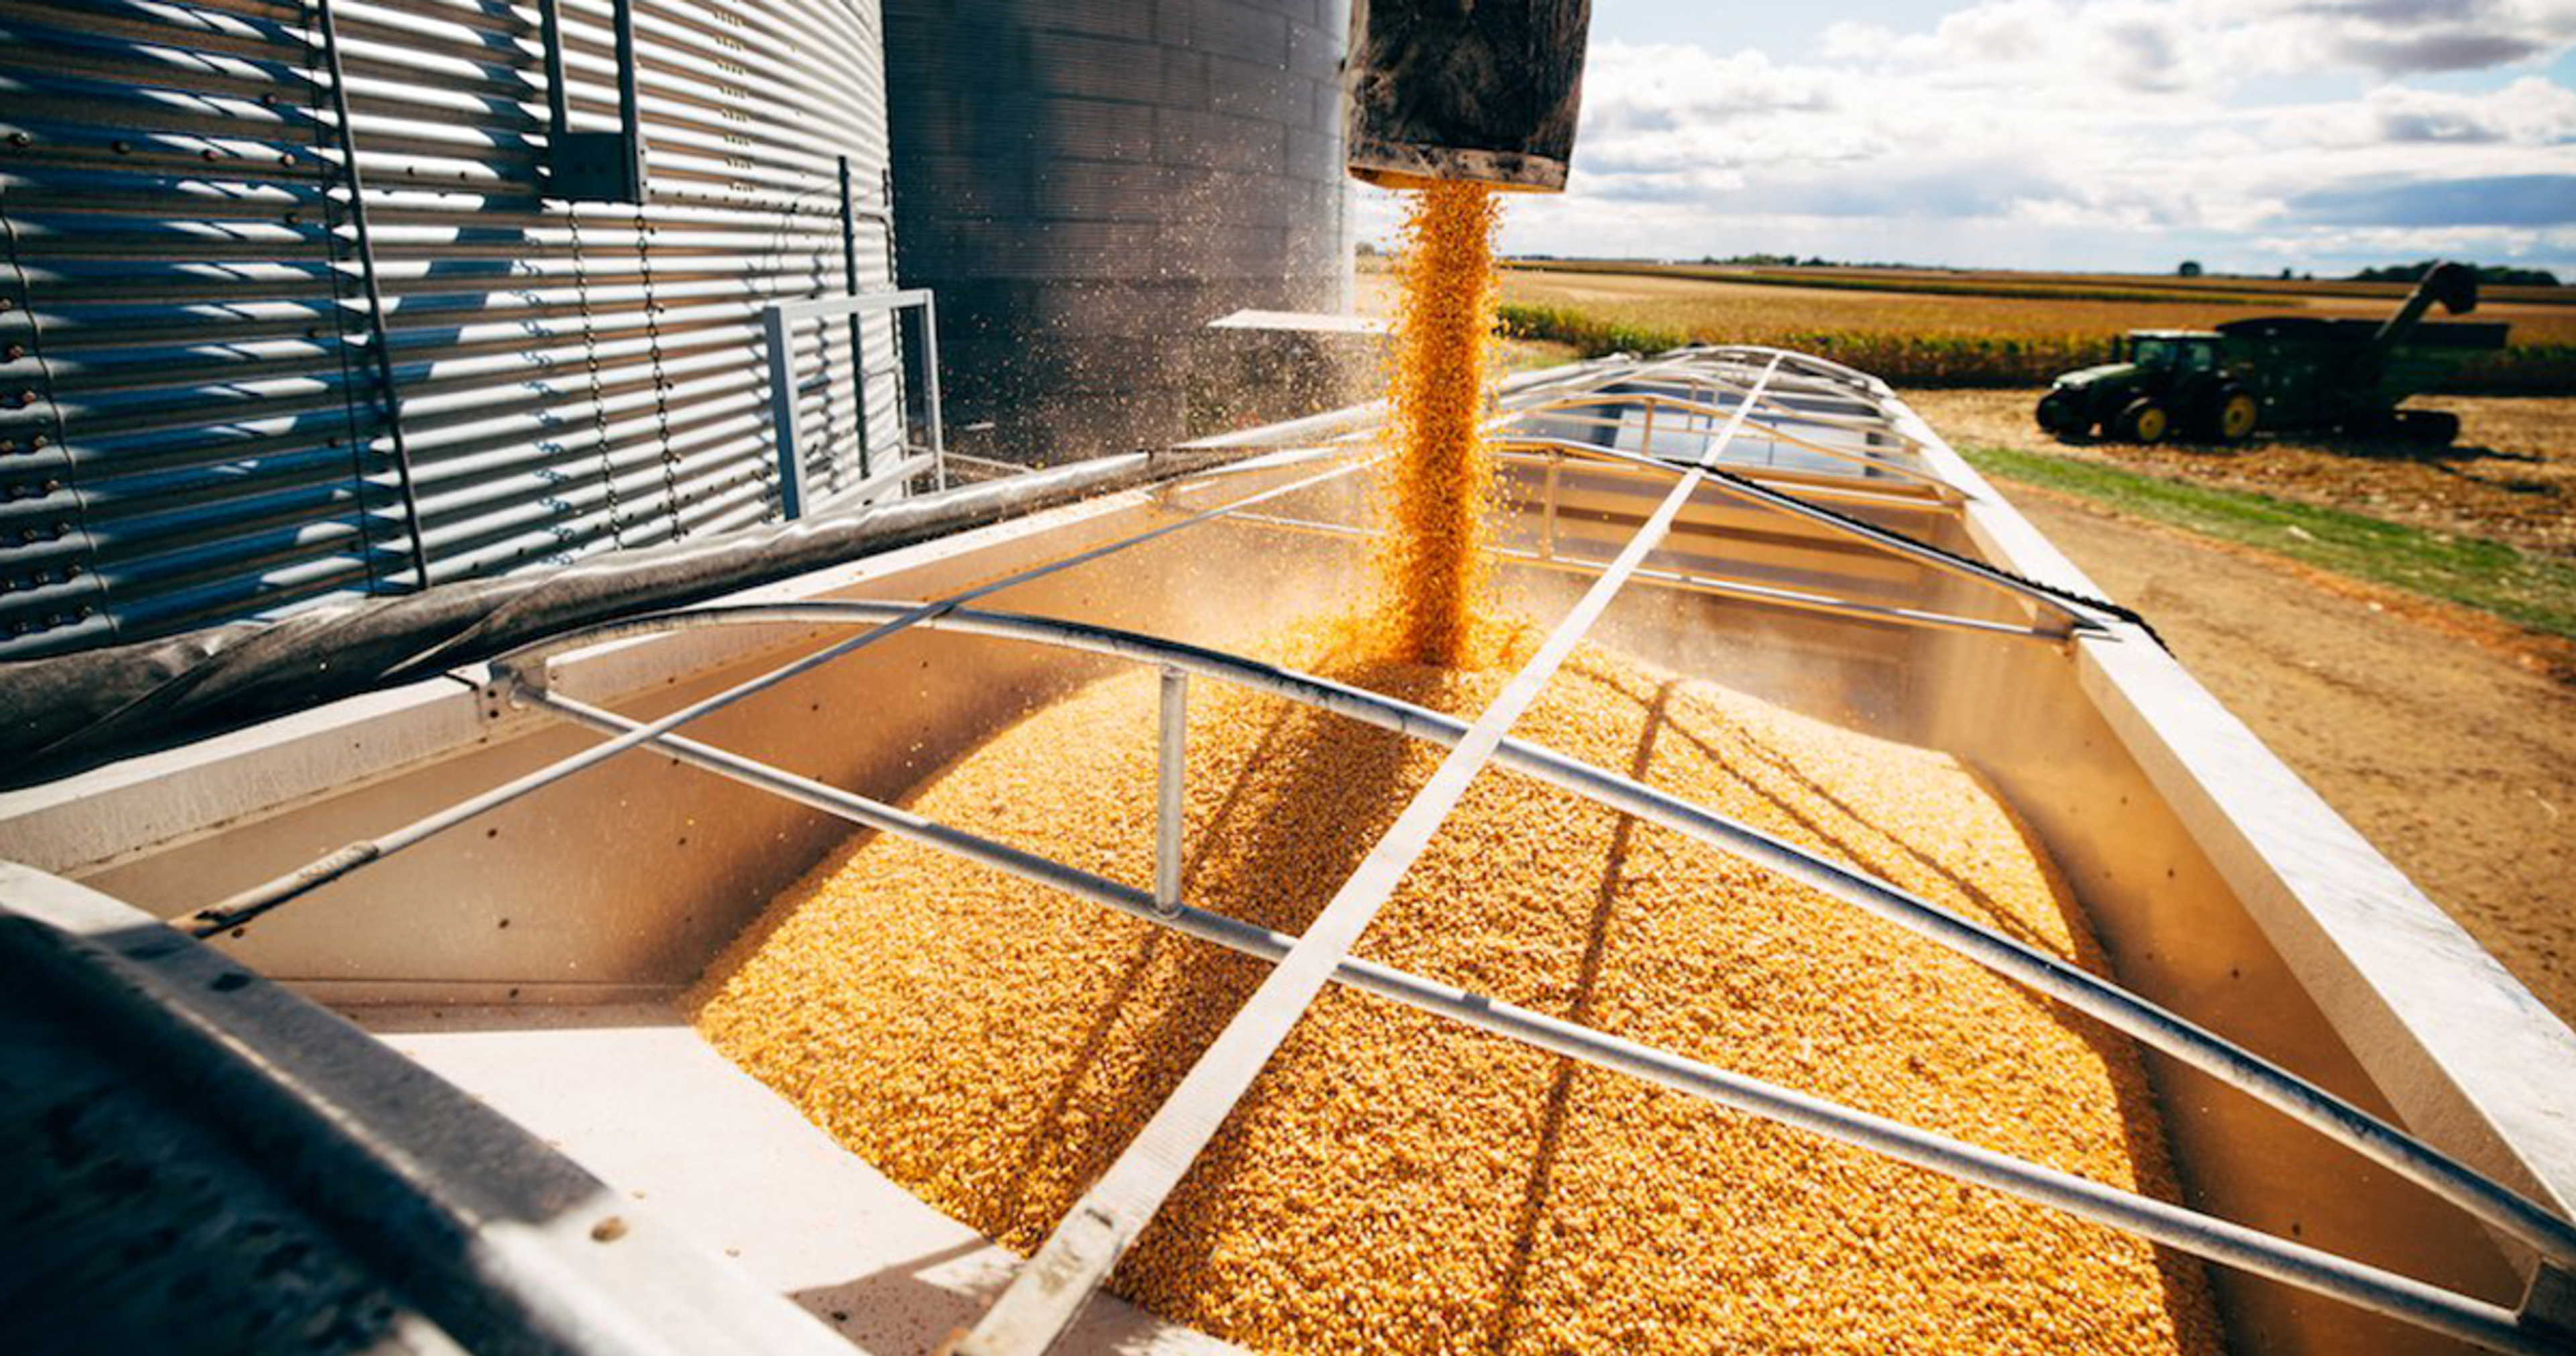 University of Kentucky Study Finds 11 Bushel Higher Corn Yield with Pivot Bio Microbial Nitrogen